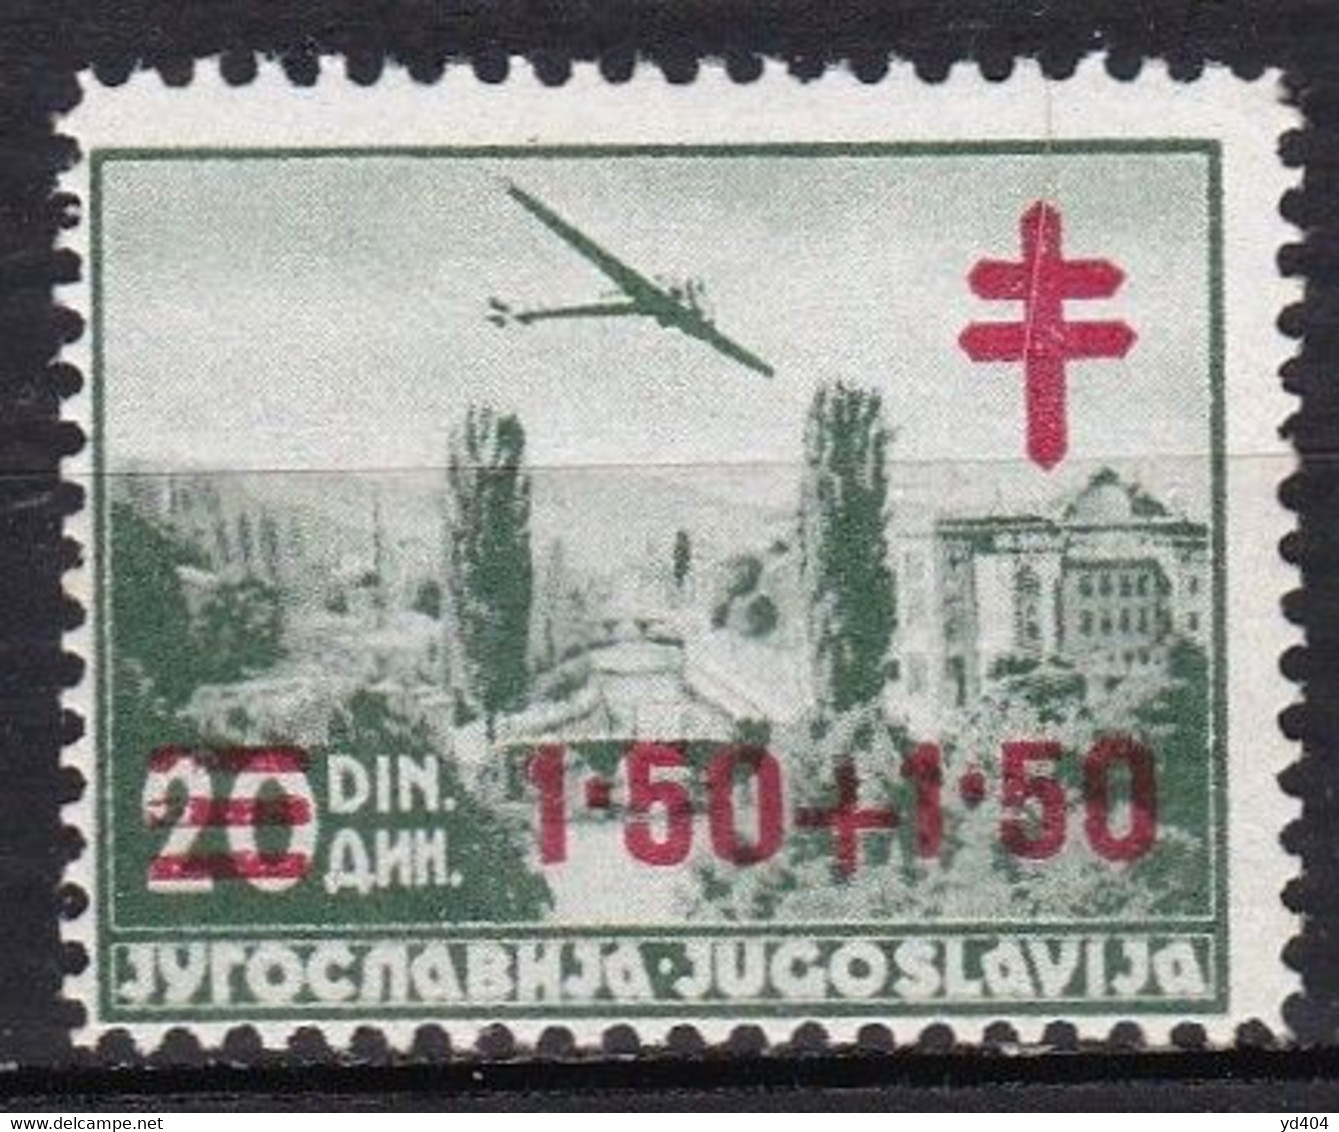 YU429 – YOUGOSLAVIA – AIRMAIL - 1940 – ANTI-T.B. FUND – SG # 448 MNH 2,50 € - Poste Aérienne